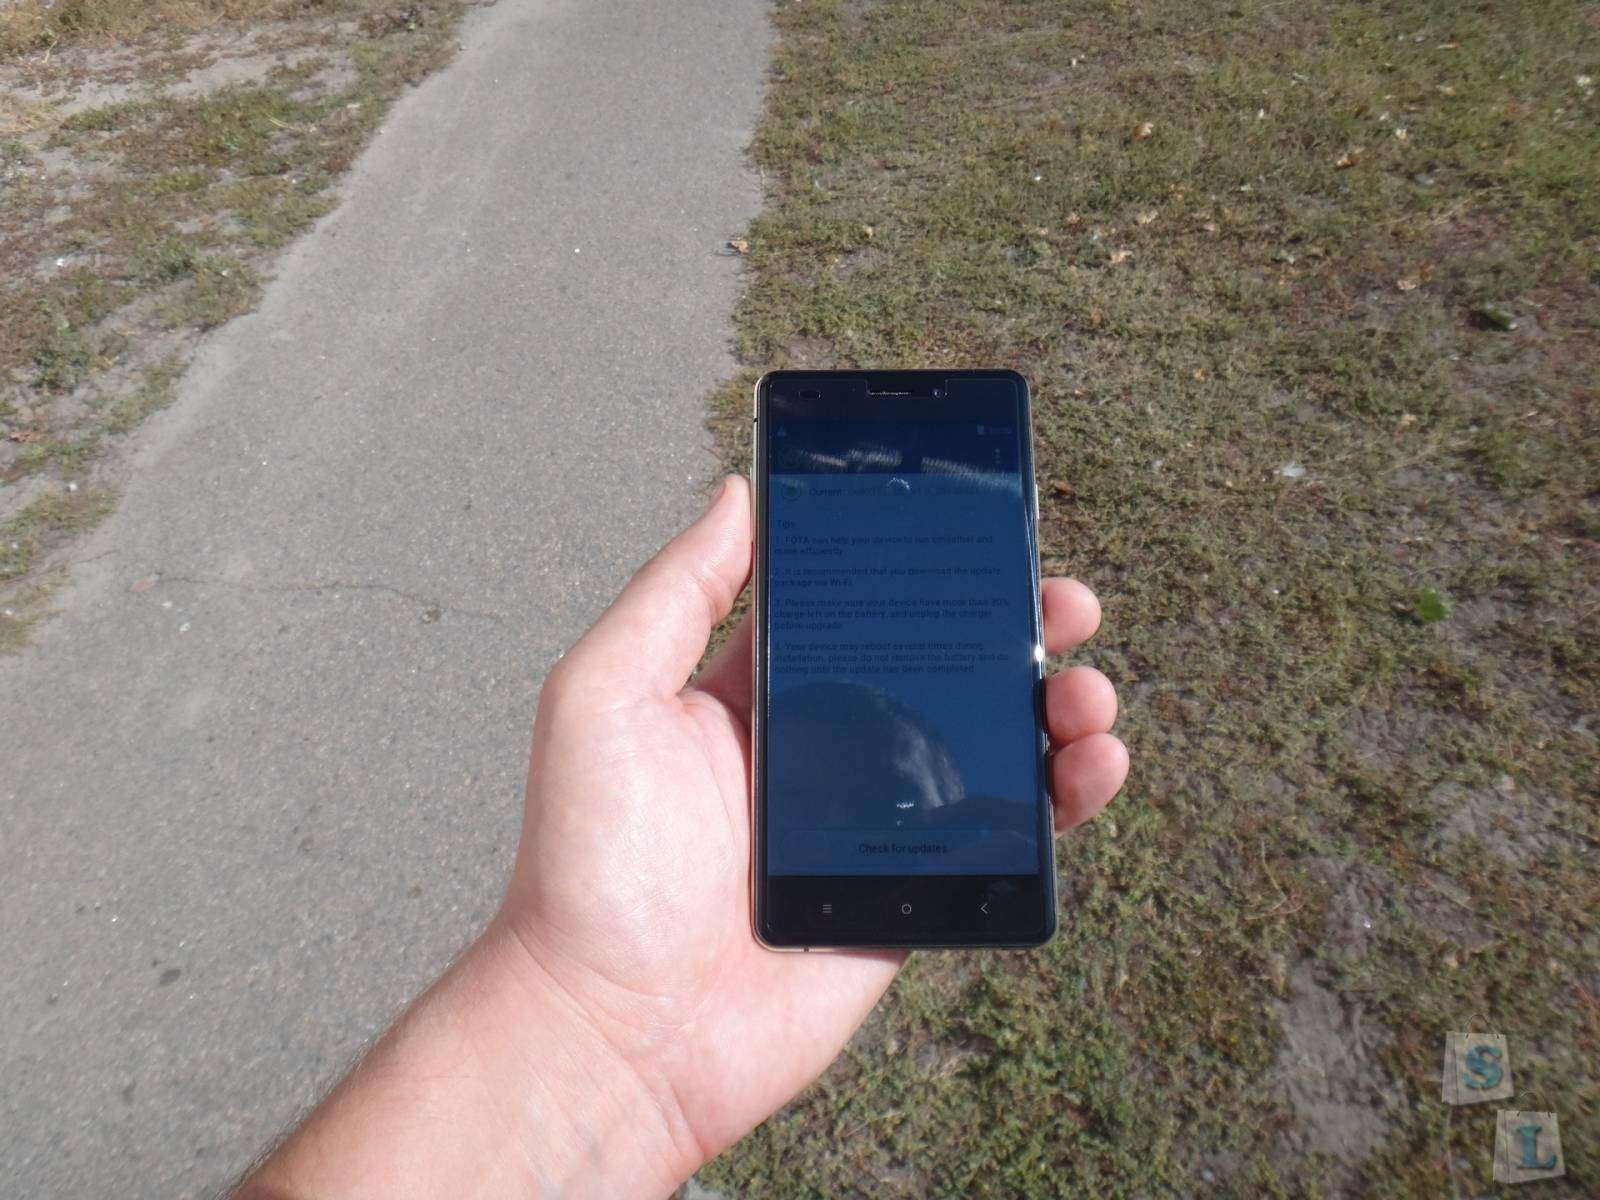 Pandawill: Oukitel U2 бюджетный смартфон стекло и метал в одном корпусе